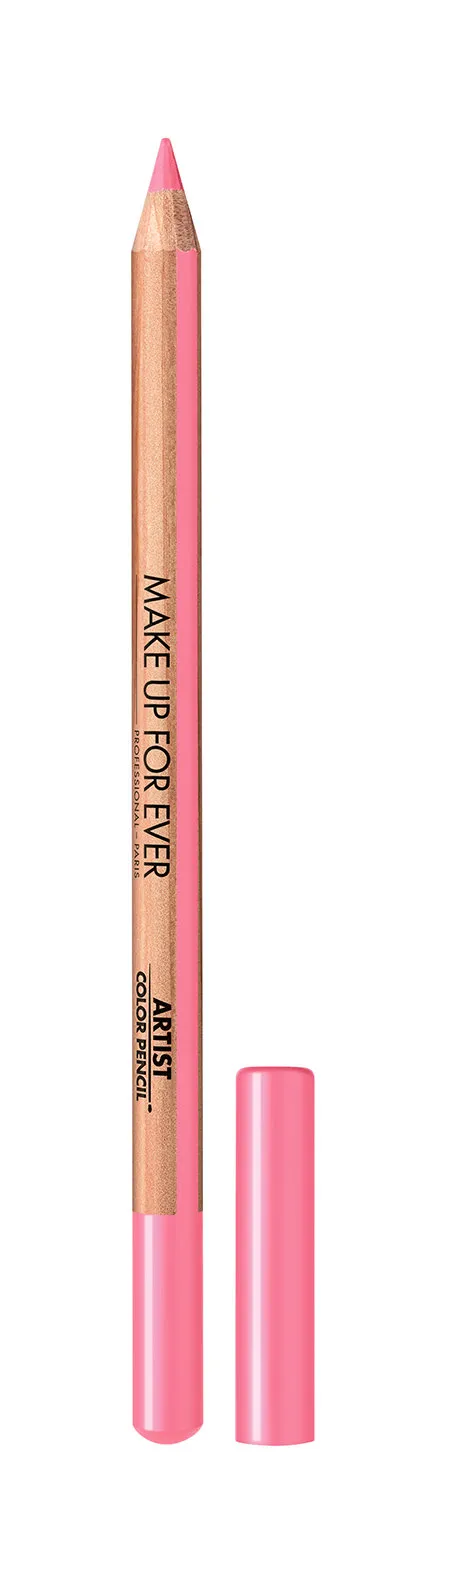 Карандаш для глаз Multi-Use Matte Pencil, 804 No Boundaries Blush, Make Up For Ever, 899 руб.